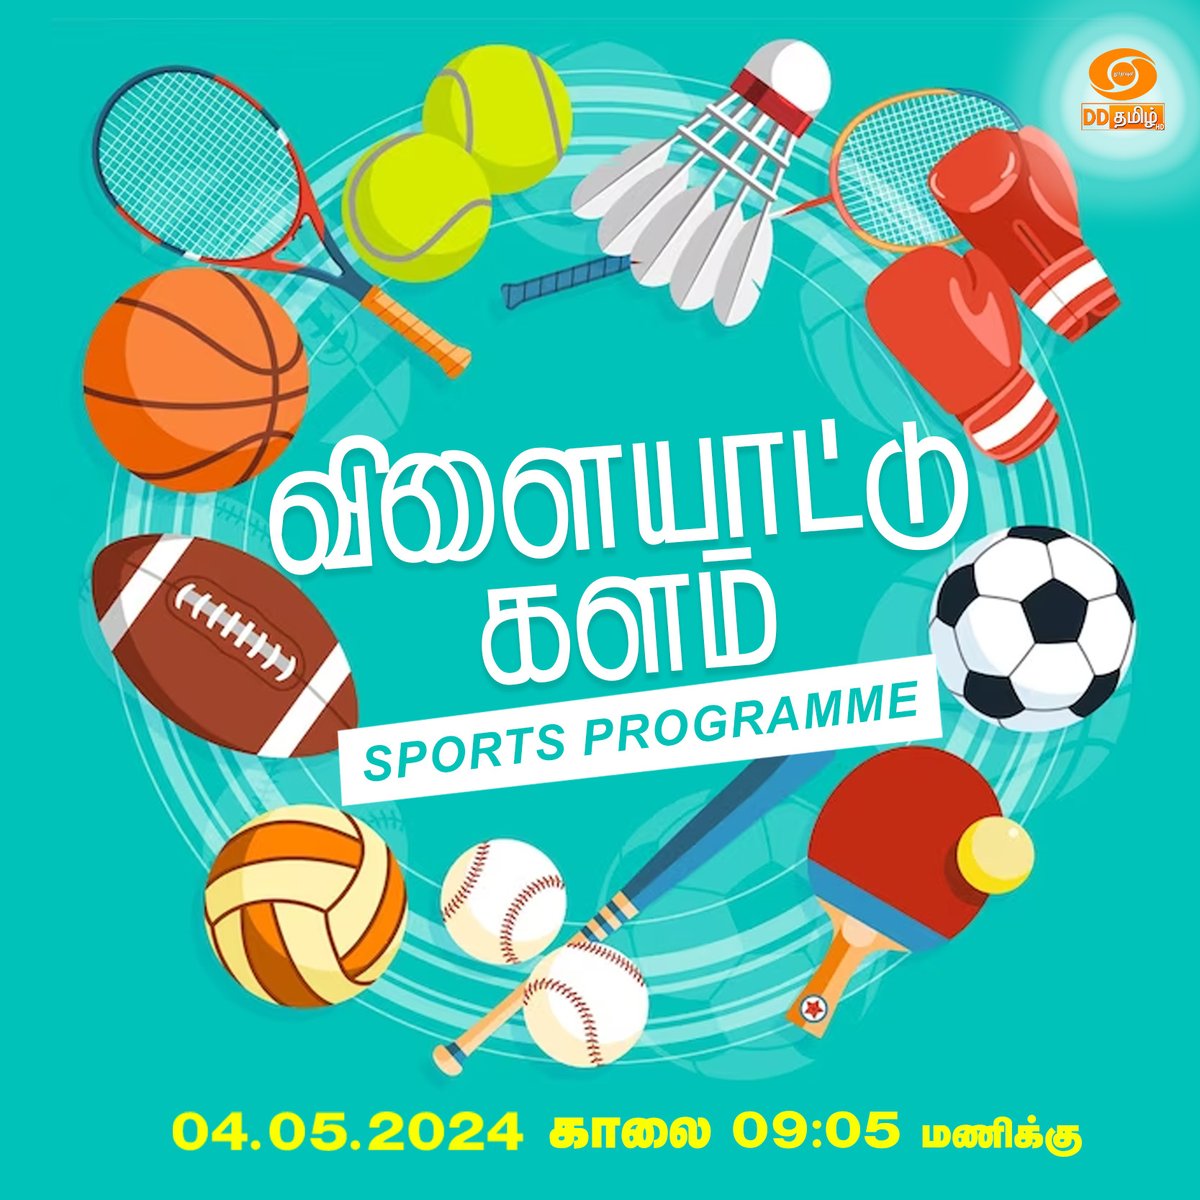 Watch 'Vilaiyaattu Kalam' | Sports programme | S. THIRUMAL VALAVAN #HOCKEYCOACH  @09:05AM on DDTamil #hockey #sports #sportstraining #motivationalquotes